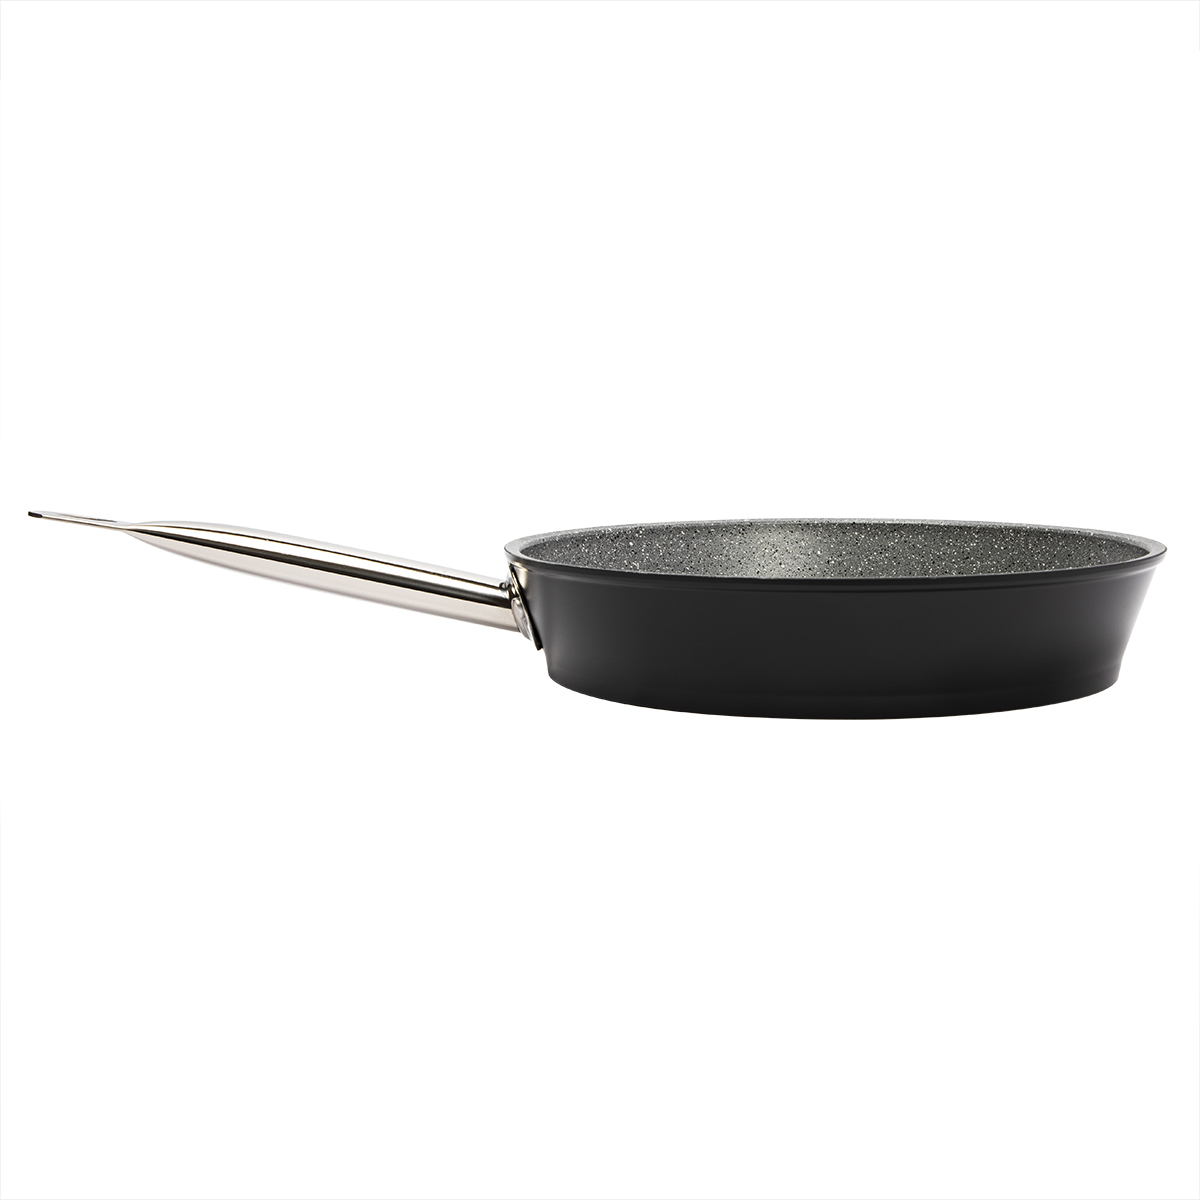 Serenk excellence granite frying pan 26 cm